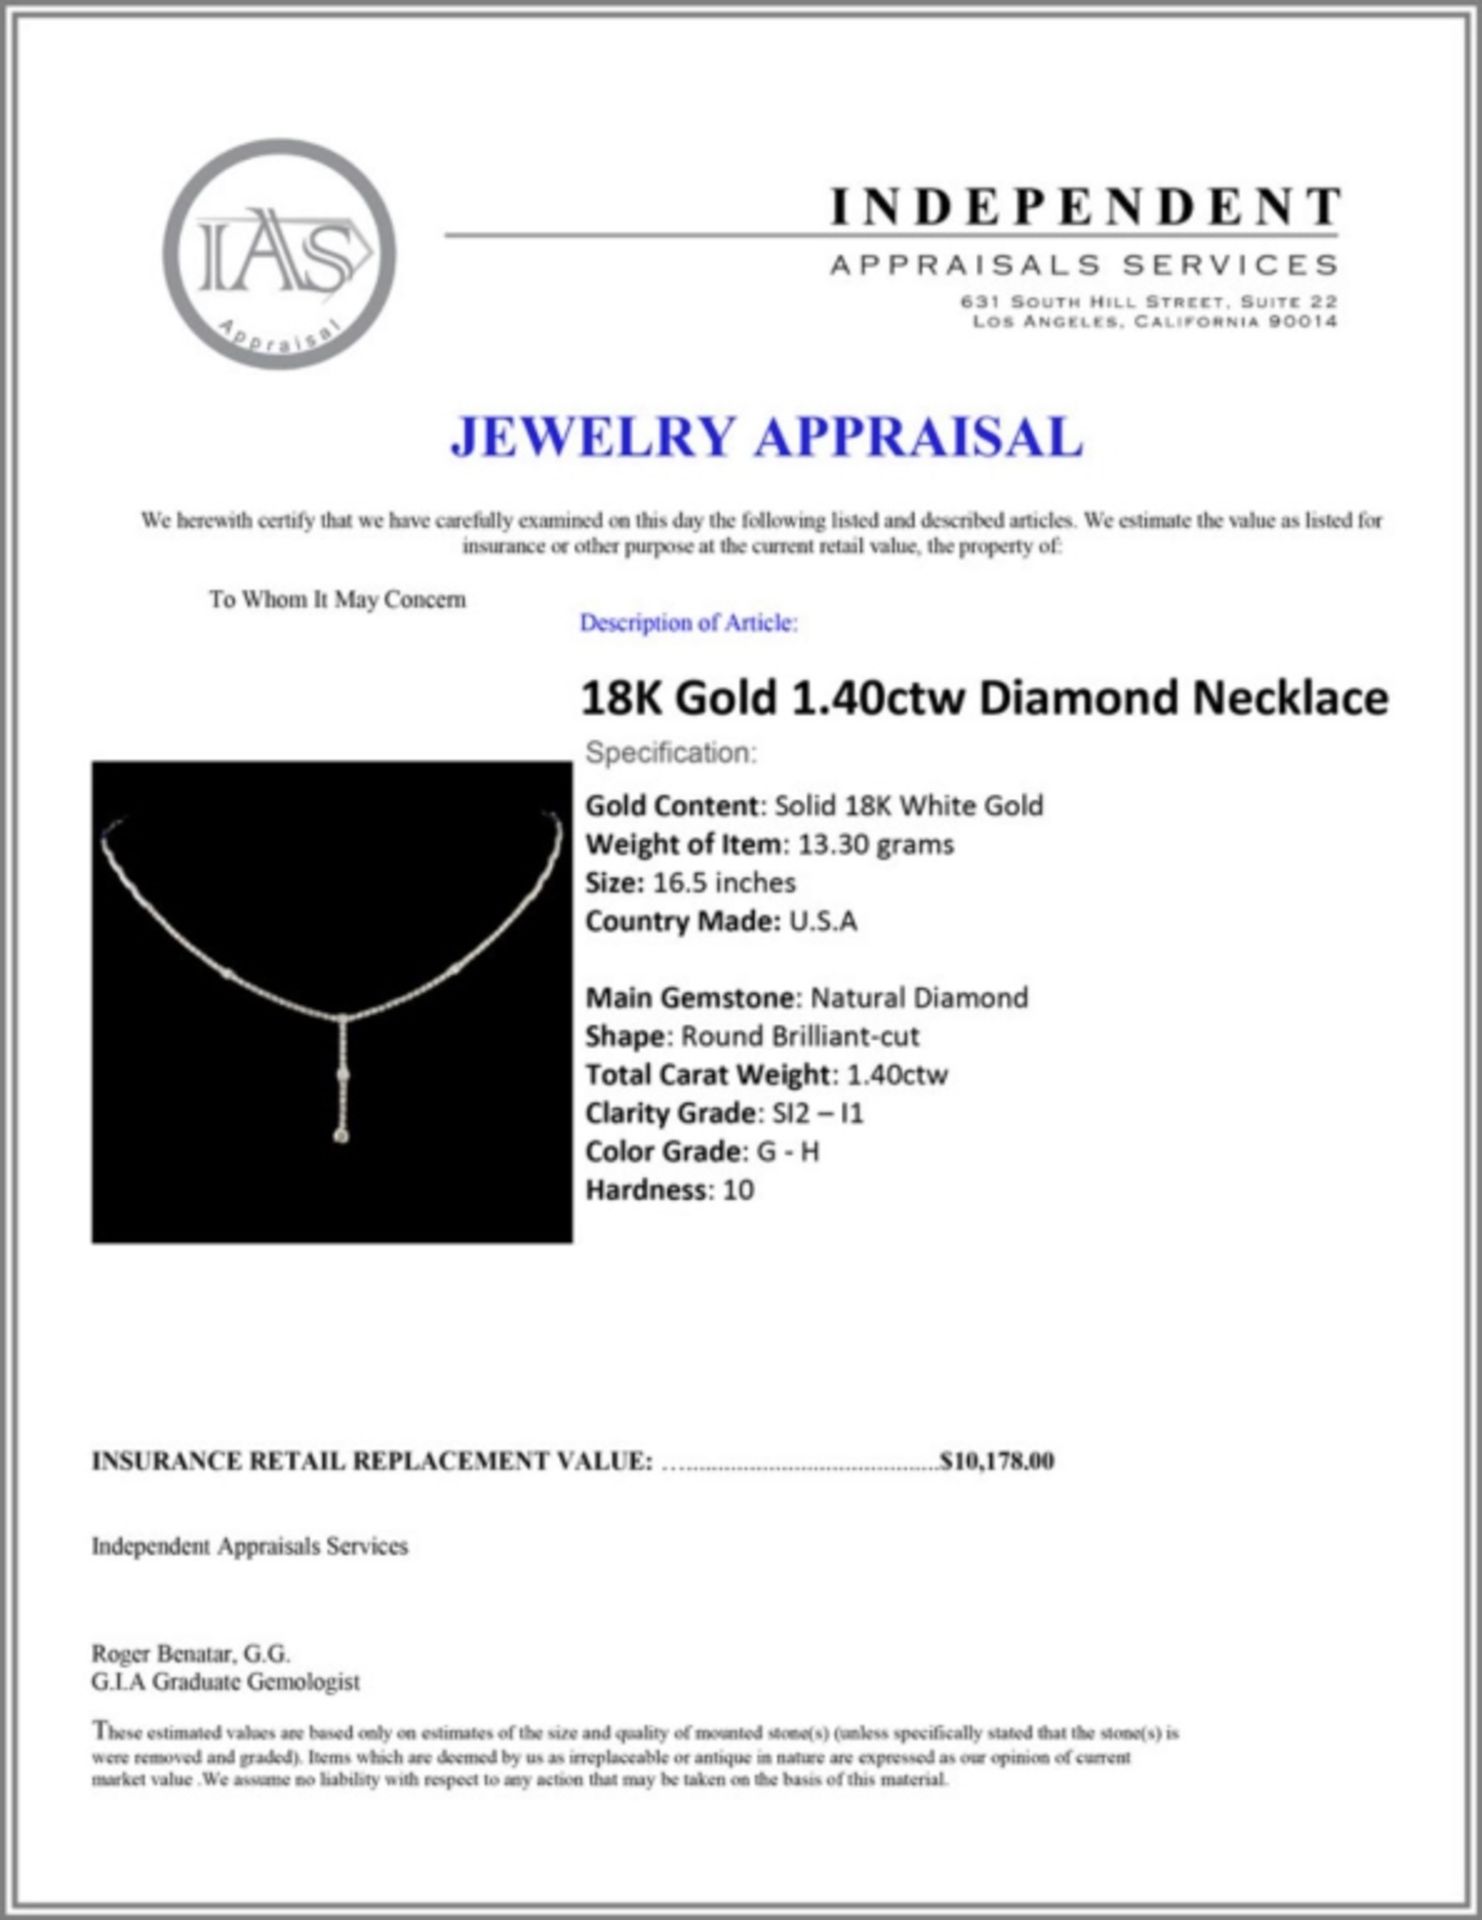 18K Gold 1.40ctw Diamond Necklace - Image 4 of 4